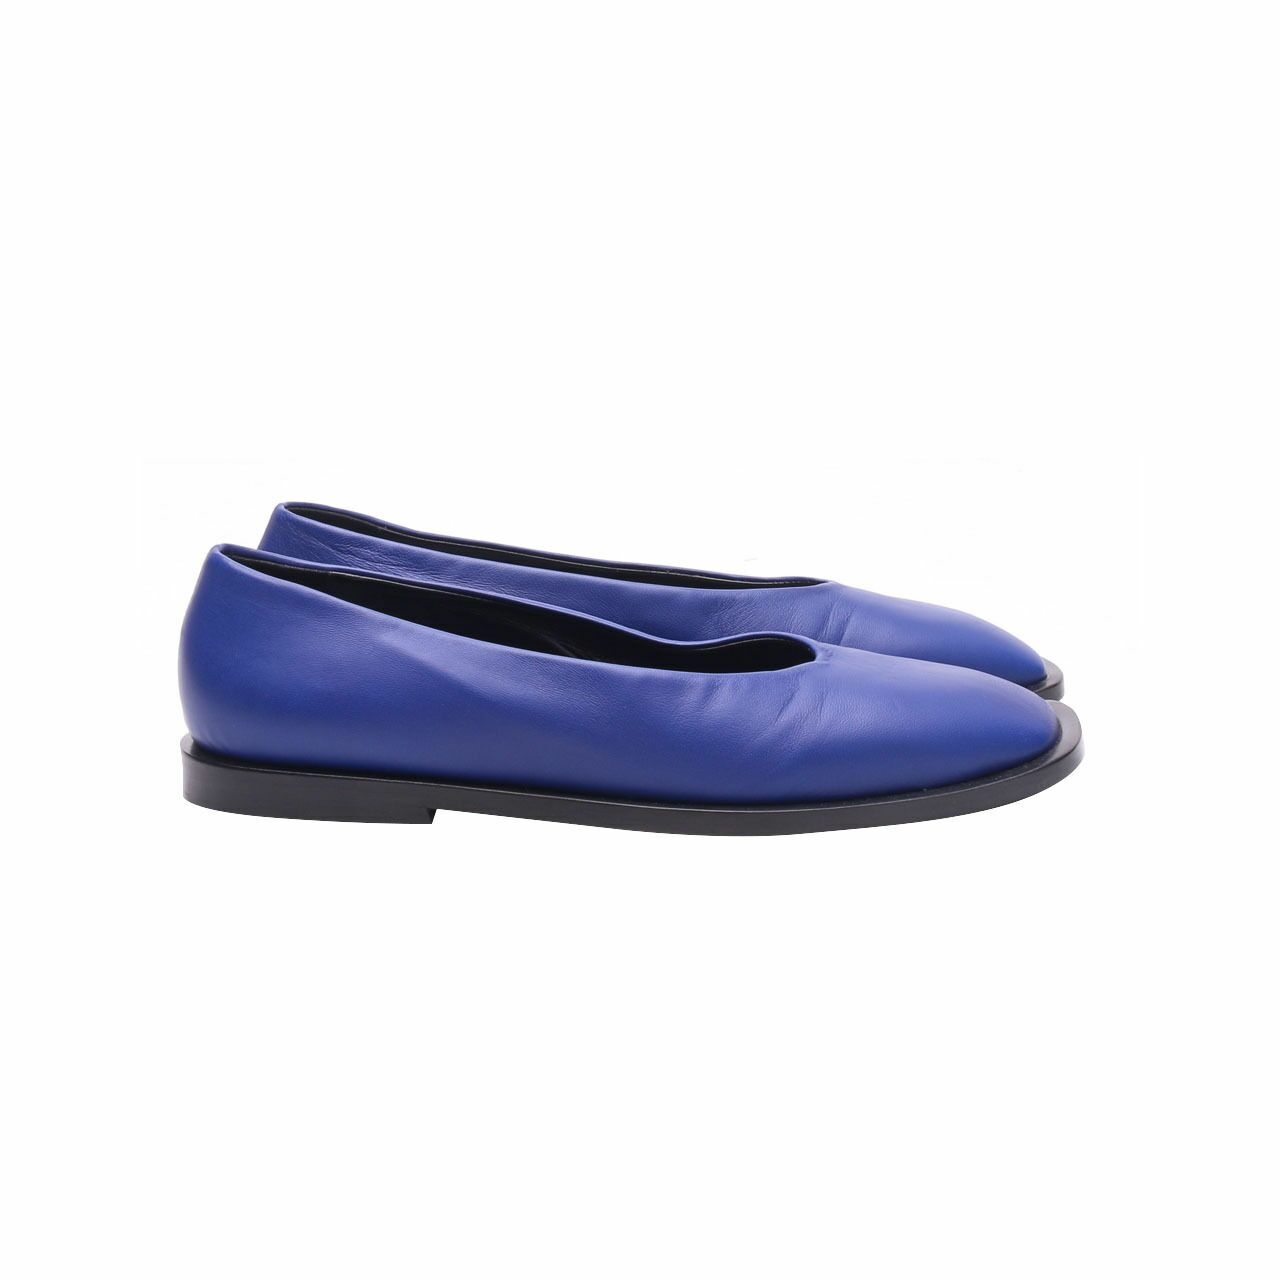 Marni Ocean Blue Leather Ballet Flats Shoes